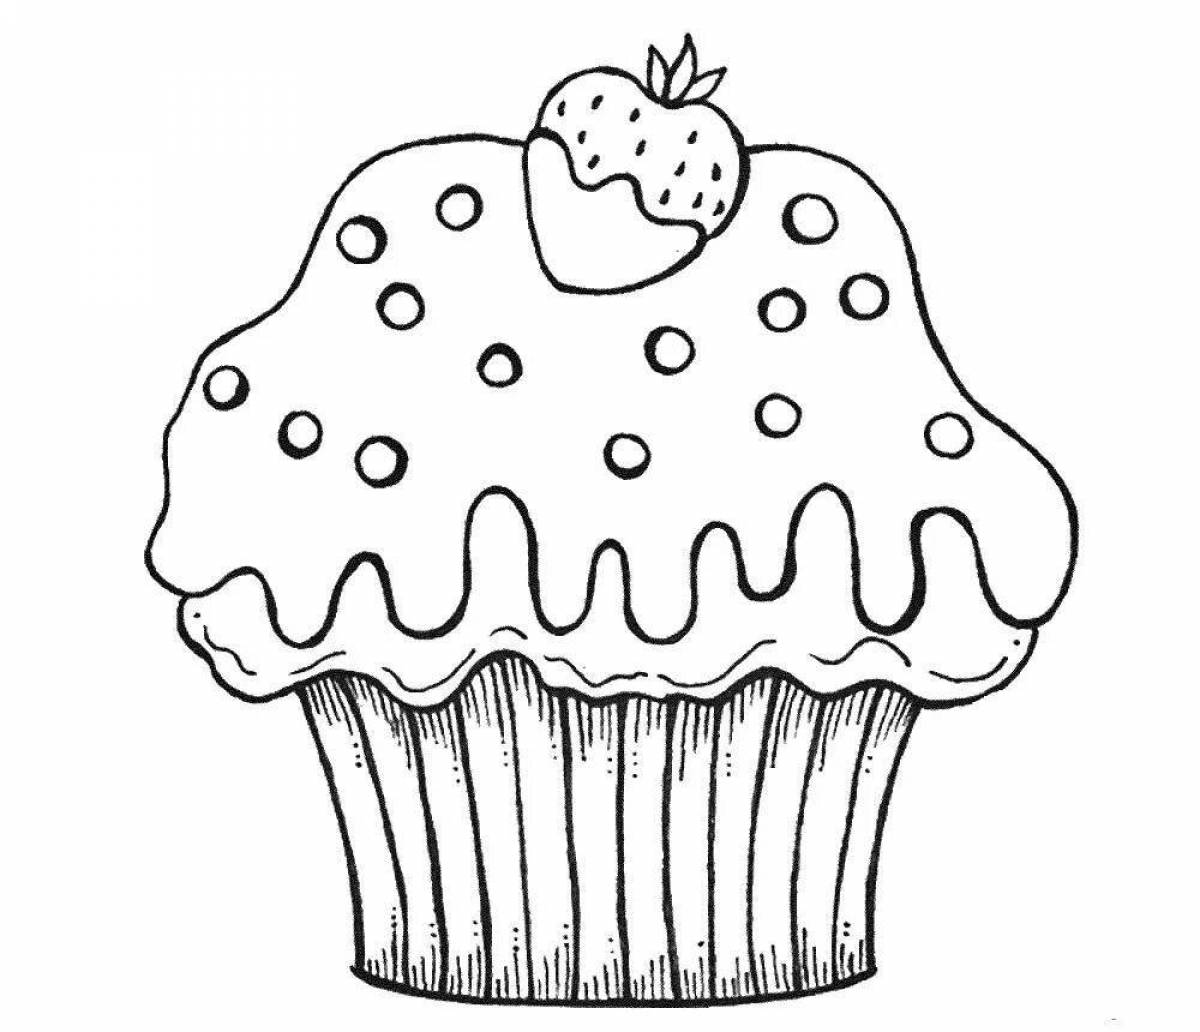 Children's cupcake #4